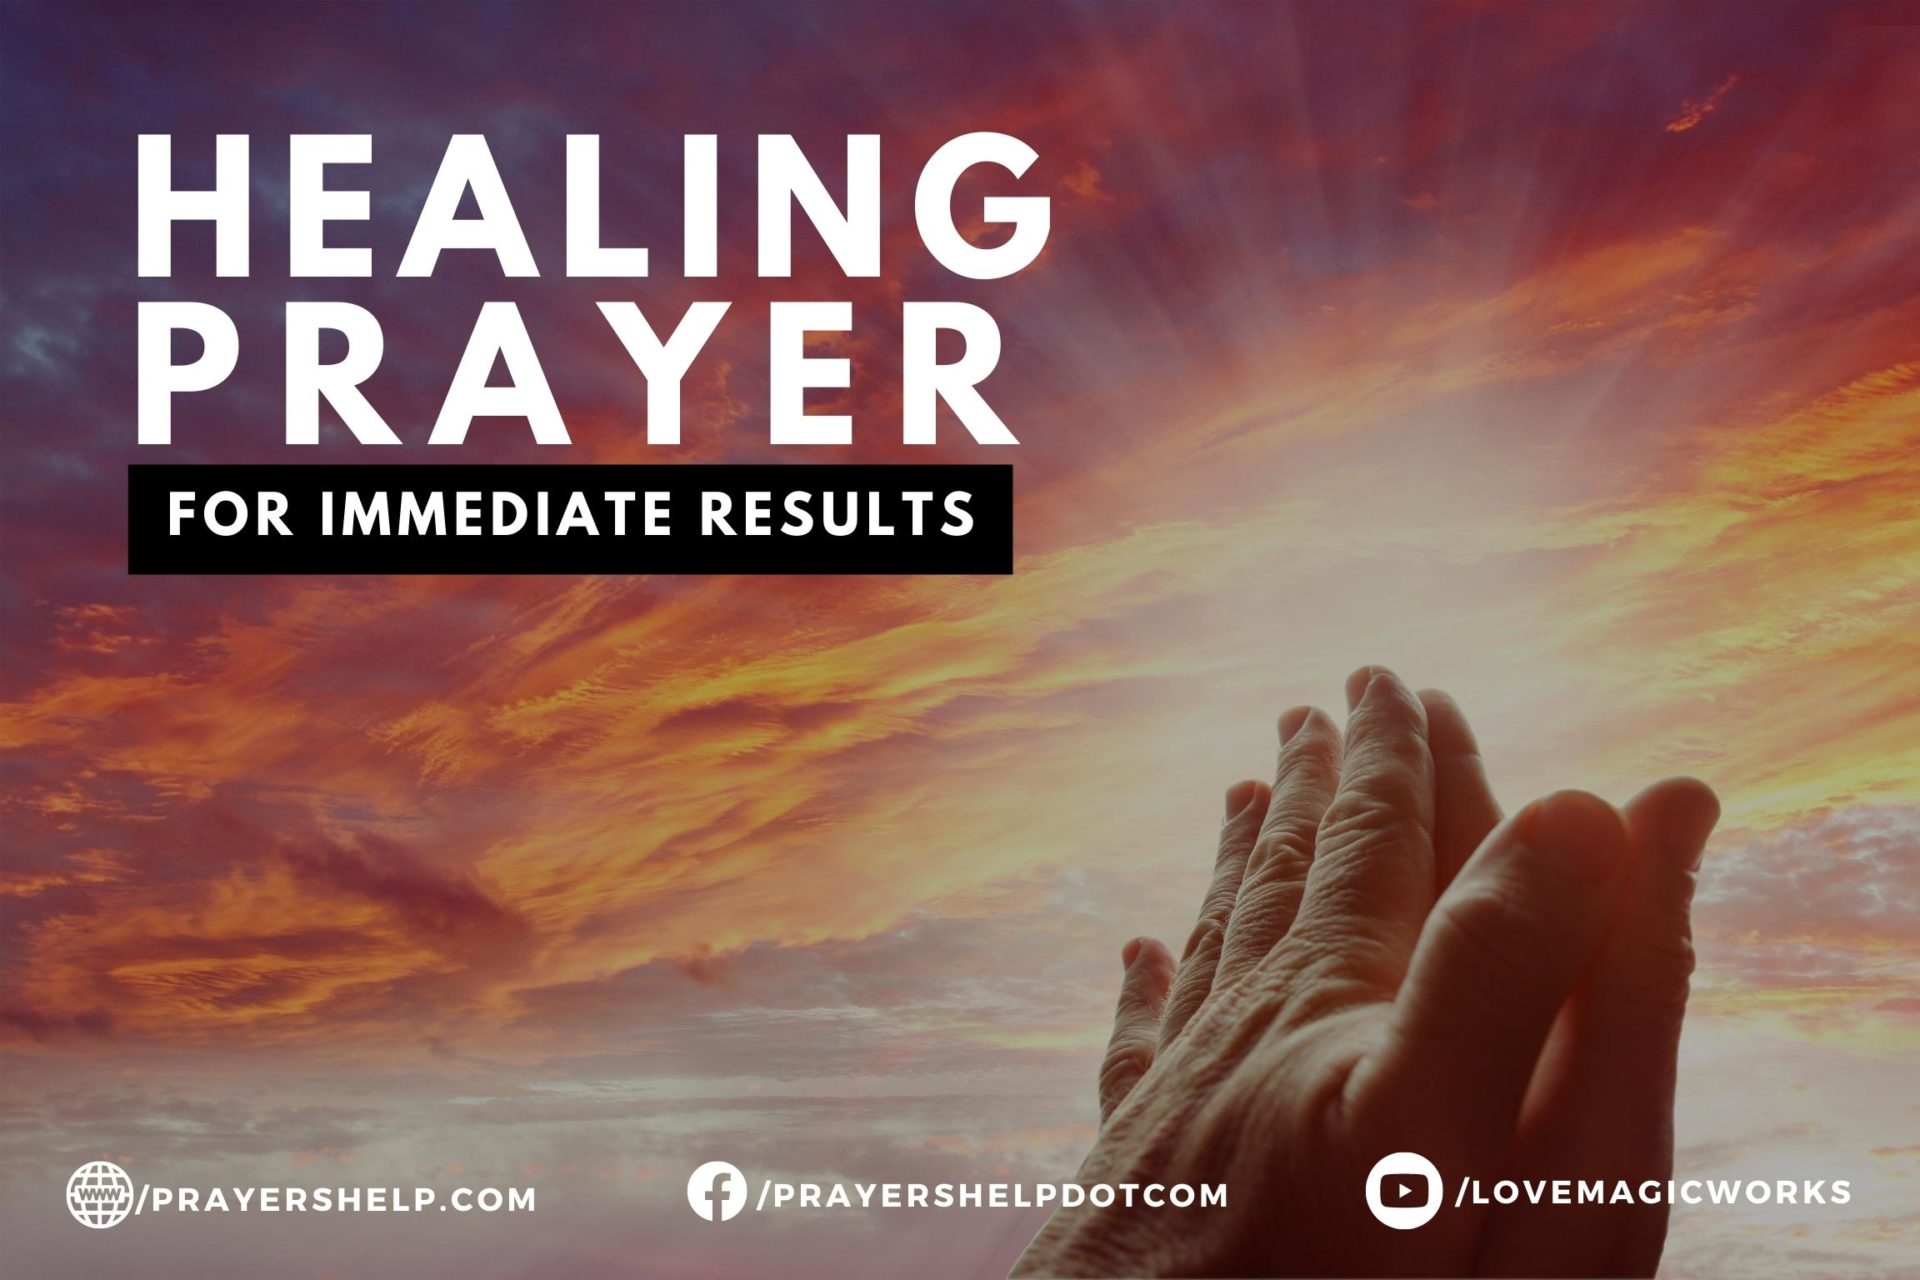 padre-pio-healing-prayer-immediate-results-prayers-help